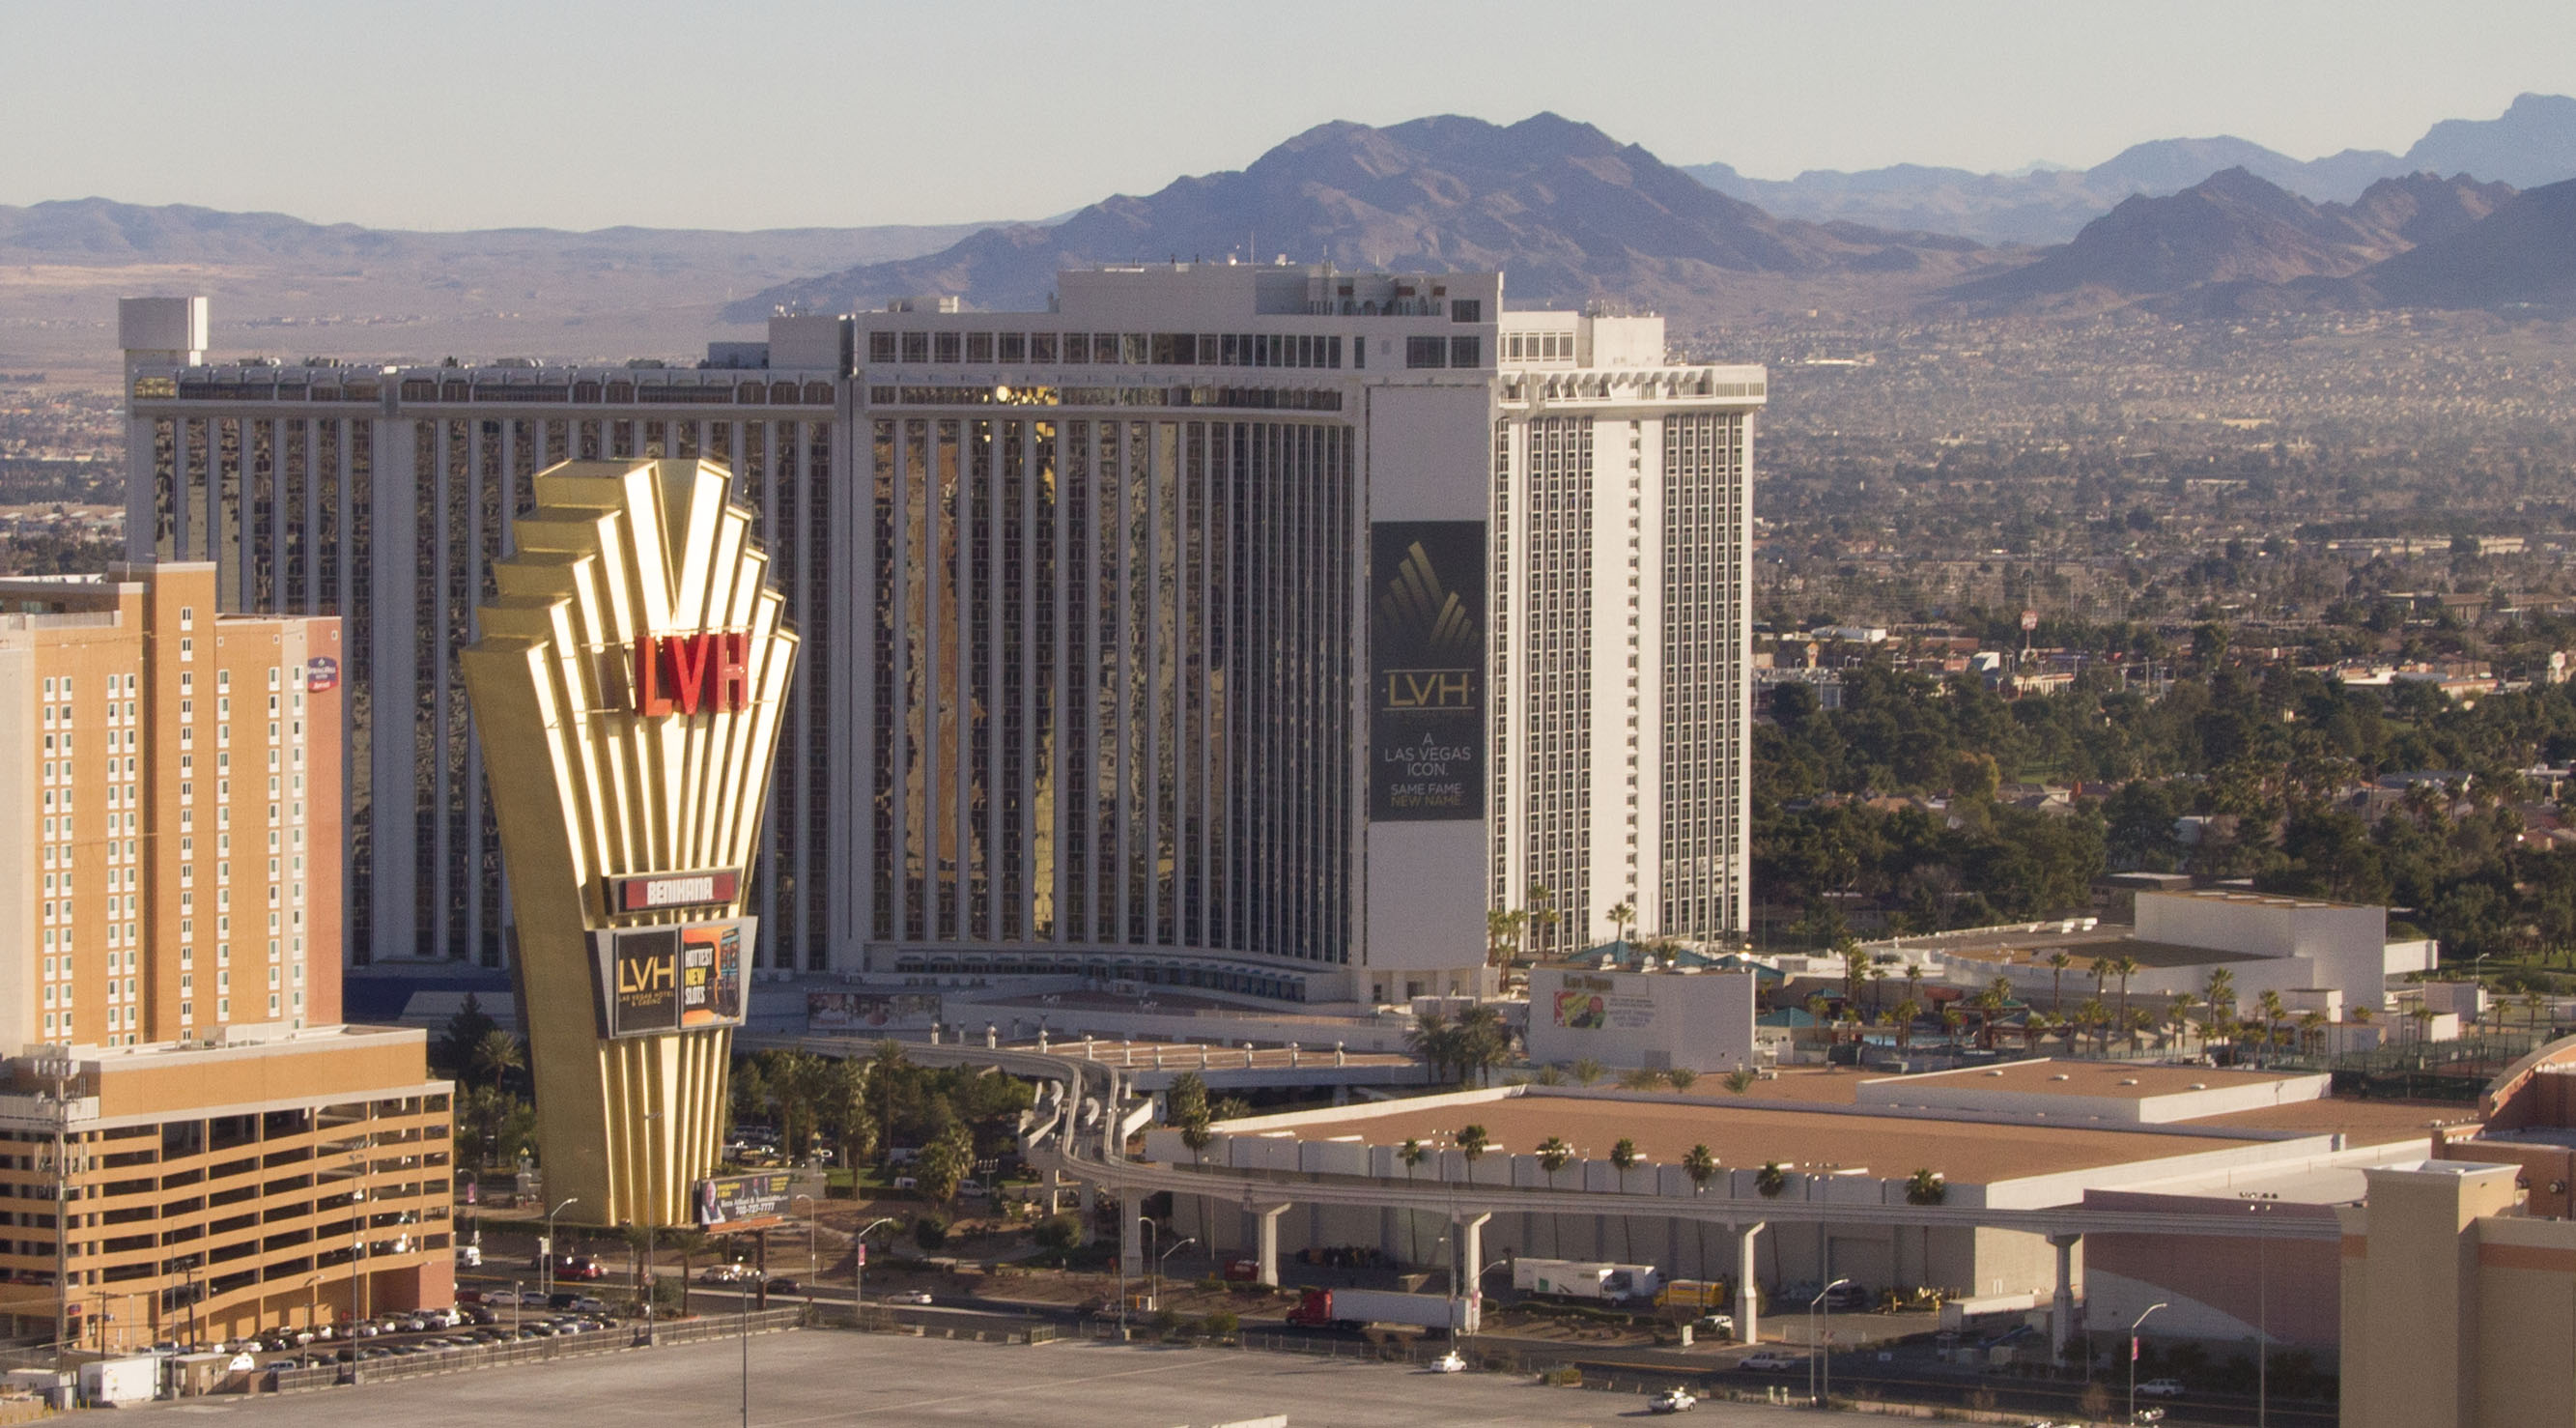 westgate las vegas resort casino careers